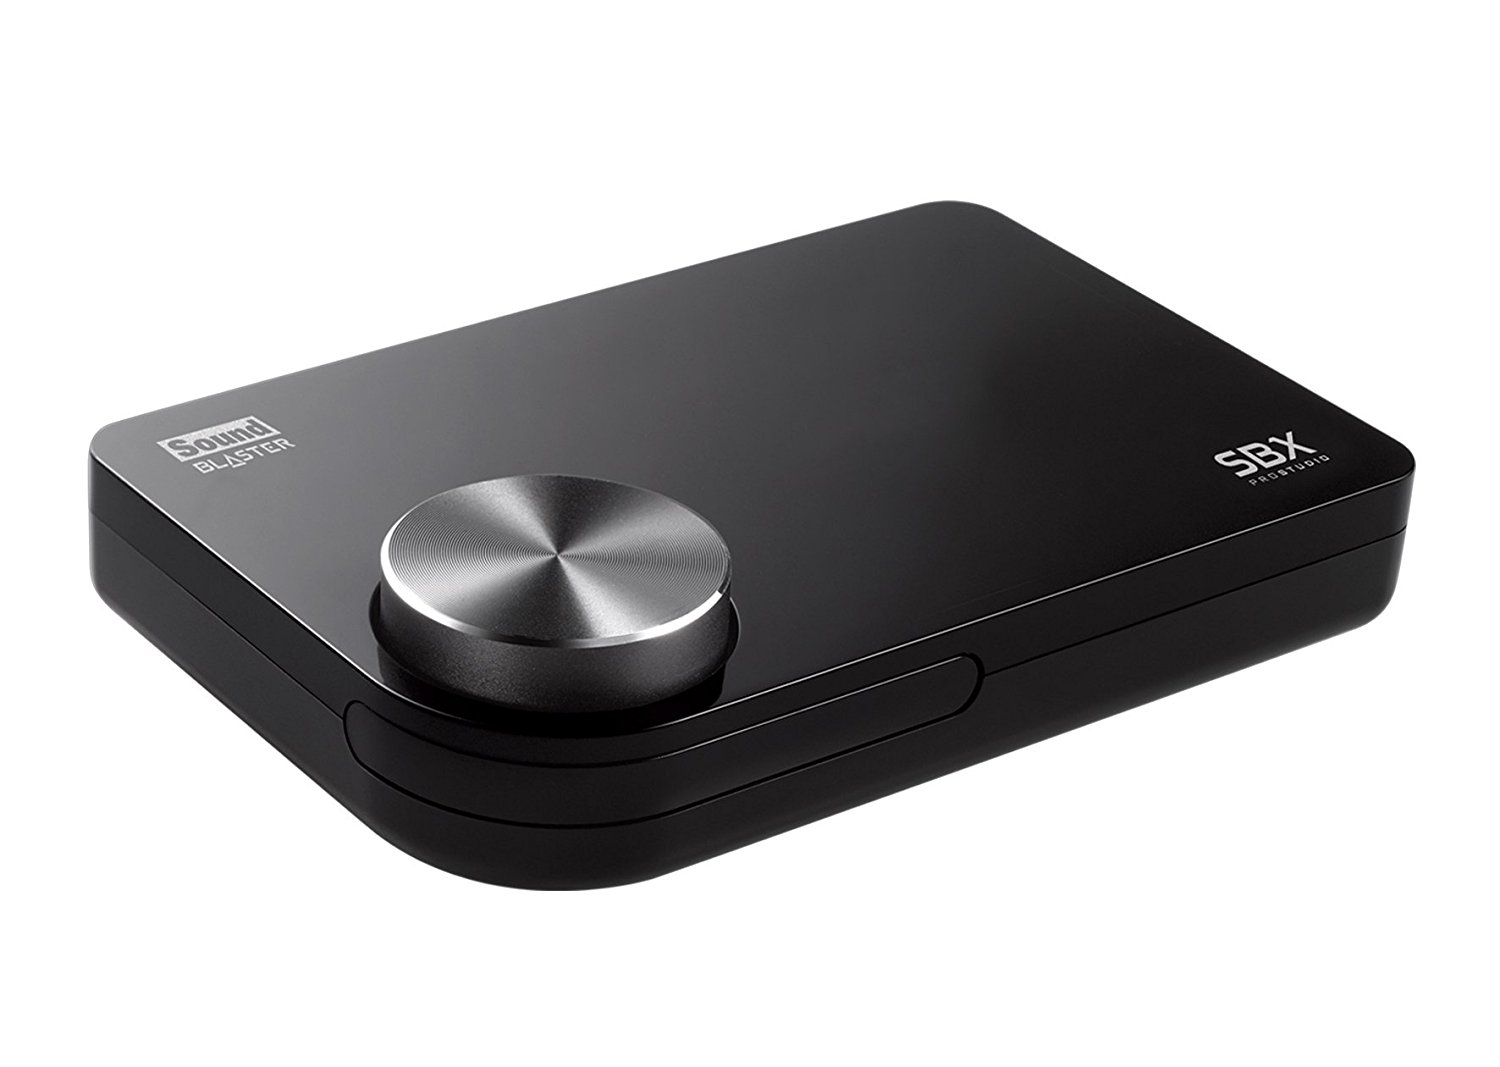 Creative Sound Blaster X-Fi Surround 5.1 Pro USB Sound Card - image 2 of 3